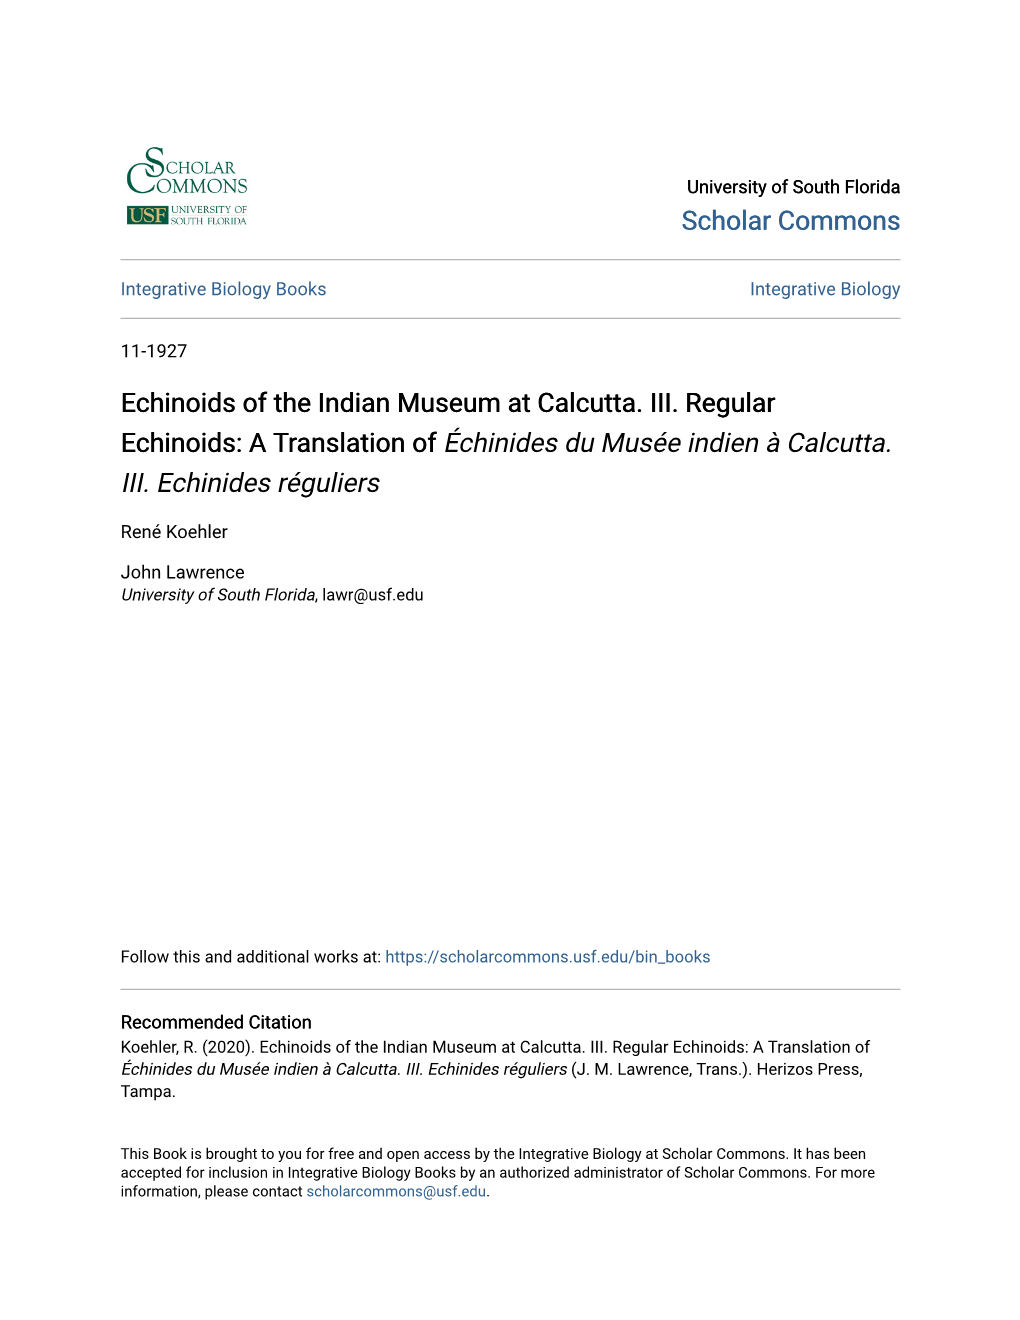 Echinoids of the Indian Museum at Calcutta. III. Regular Echinoids: a Translation of Échinides Du Musée Indien À Calcutta